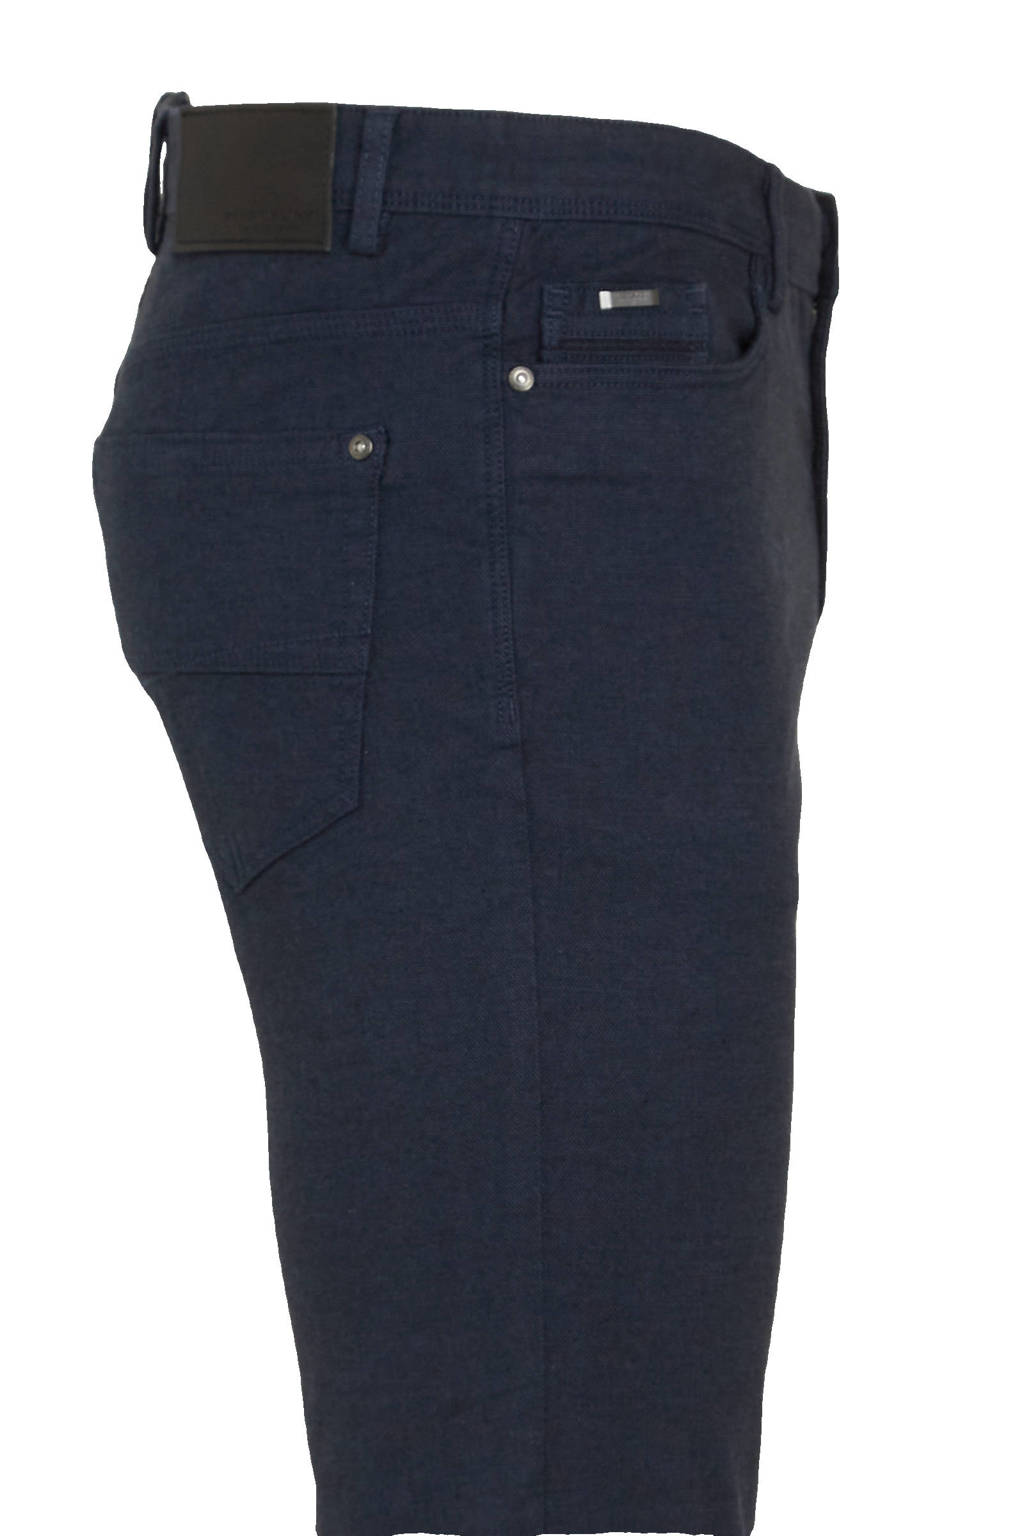 C&A Westbury Premium regular broek donkerblauw | wehkamp